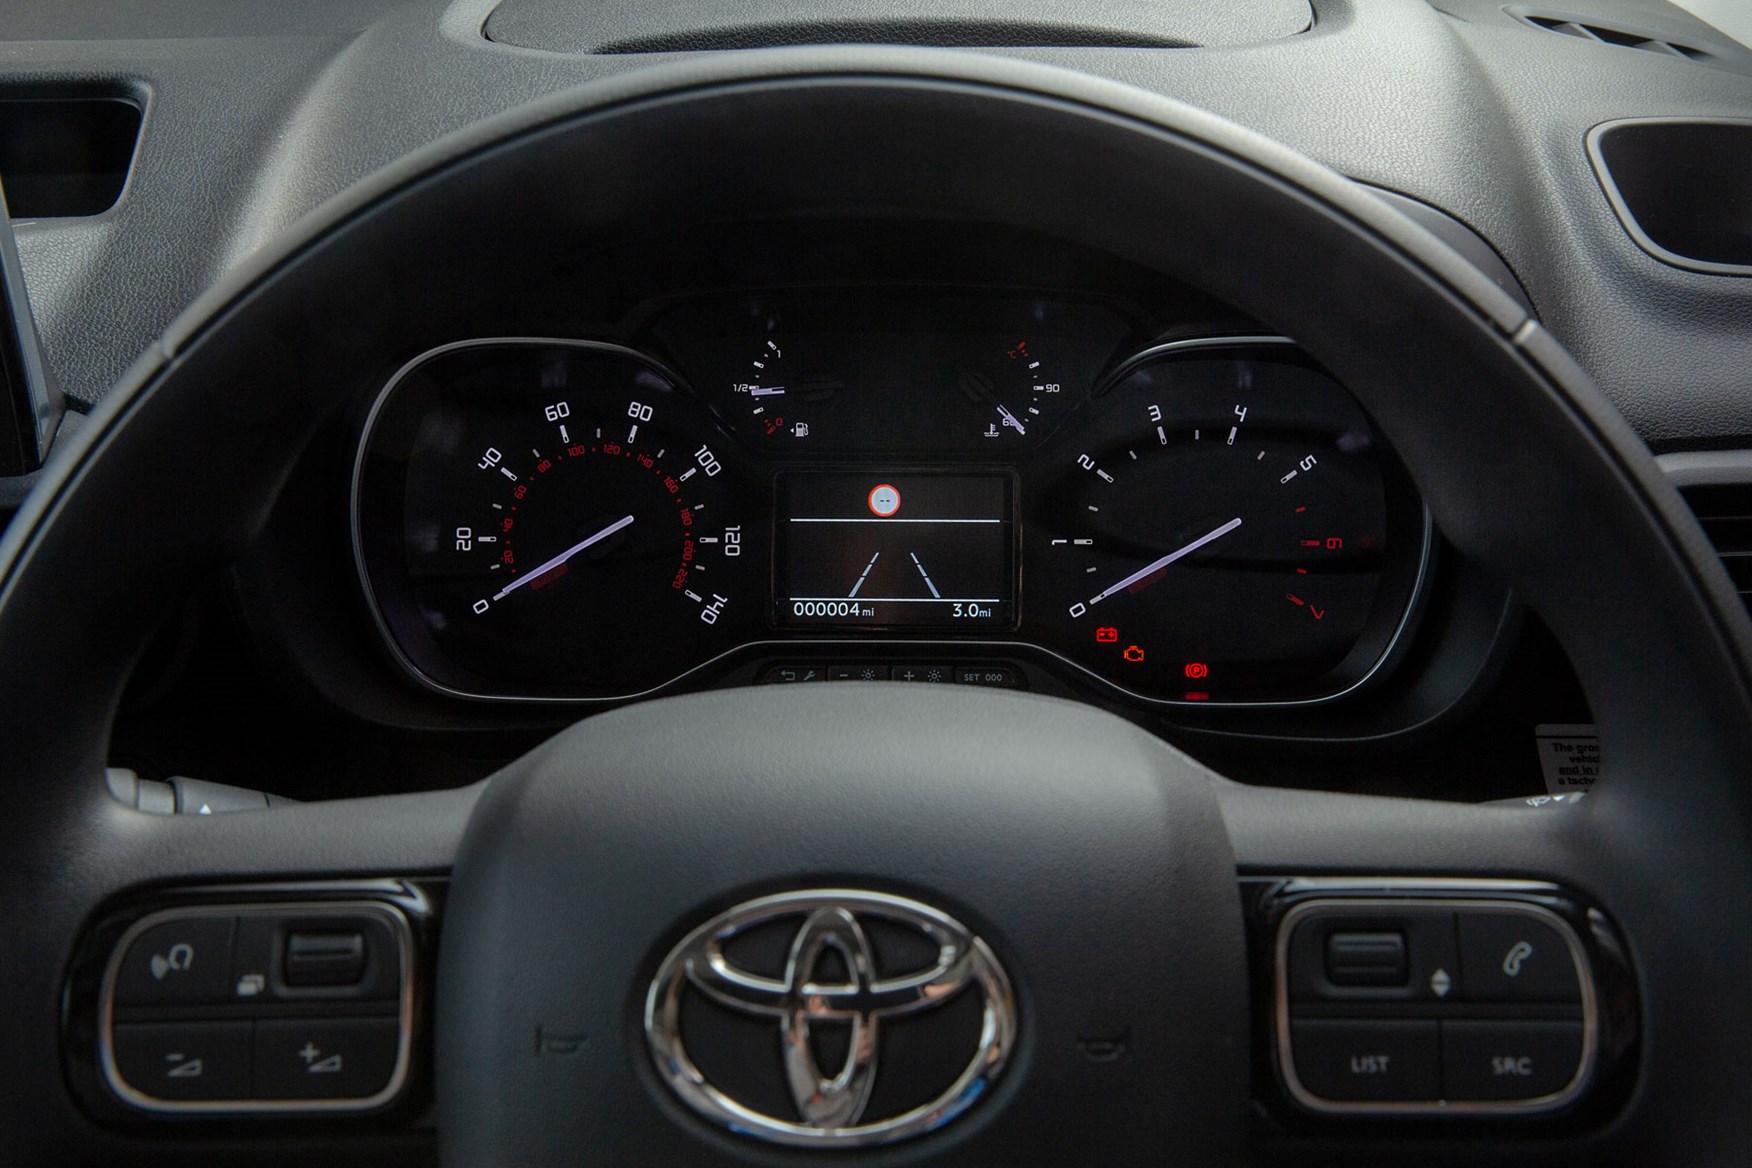 2020 Toyota Proace City review - cab interior, gauges